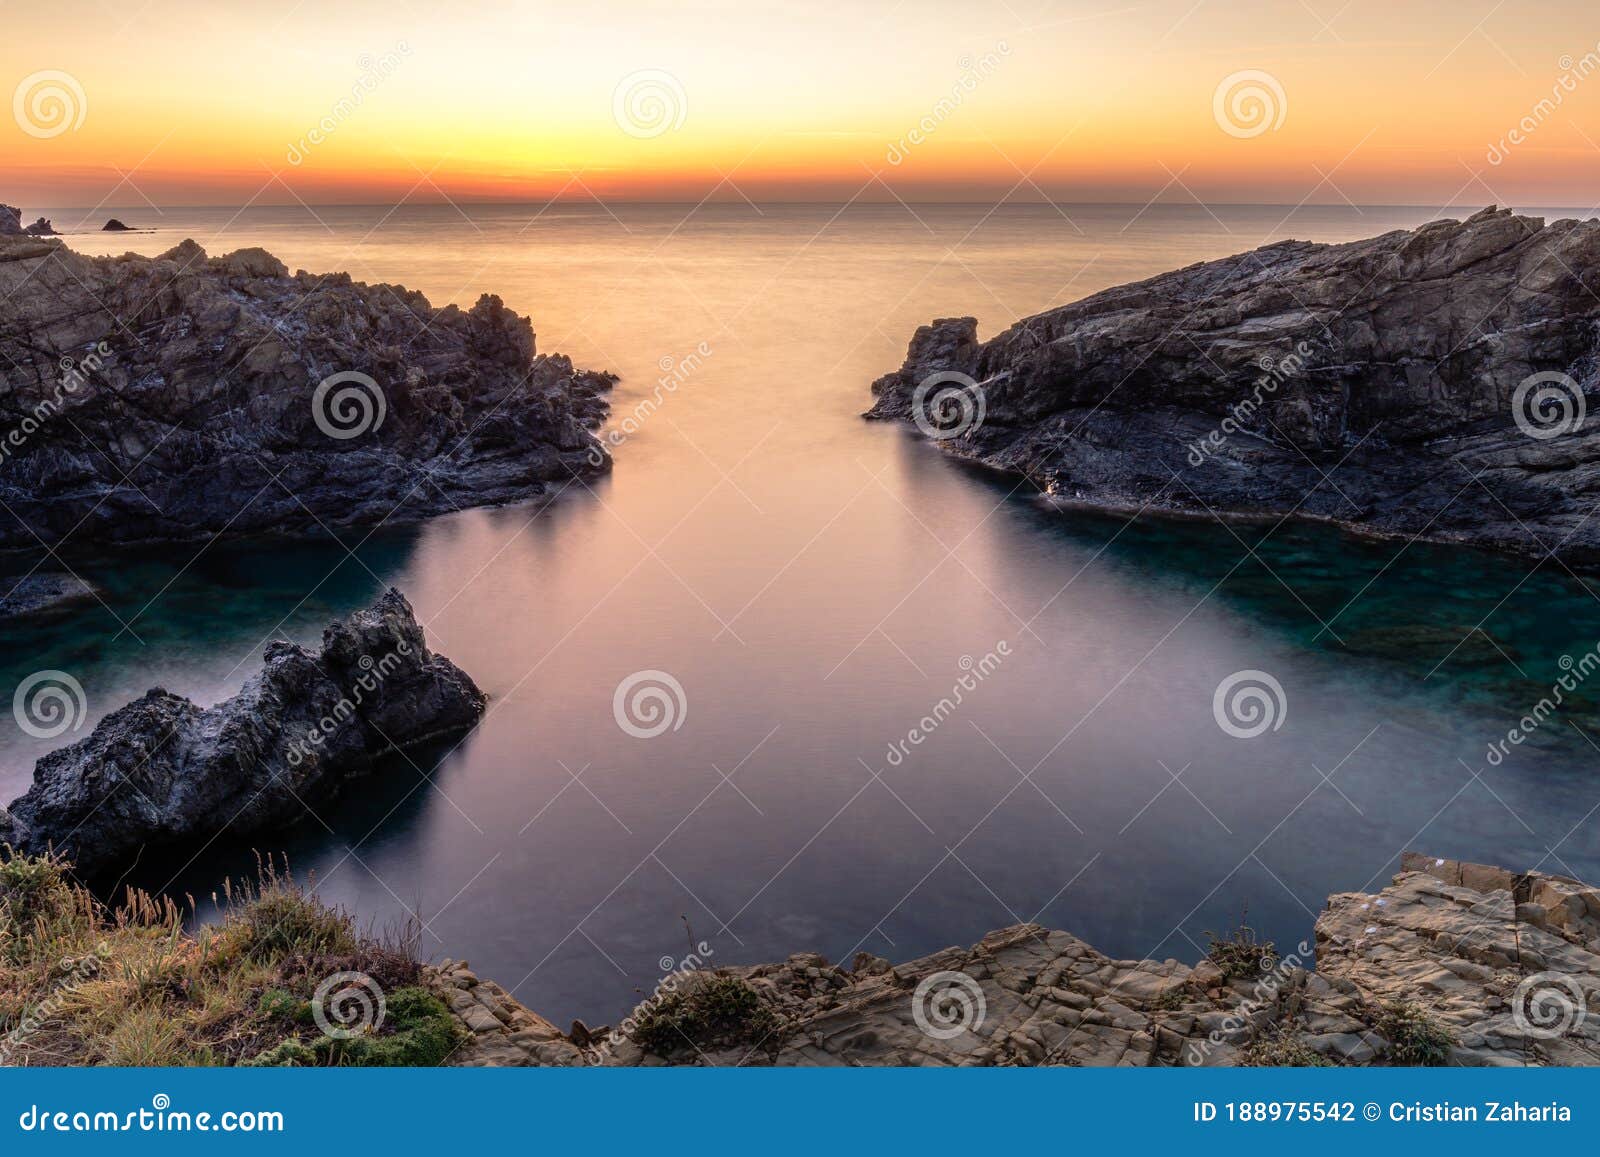 sunrise at the mediterranean sea - cala bramant. alt emporda, catalonia, spain